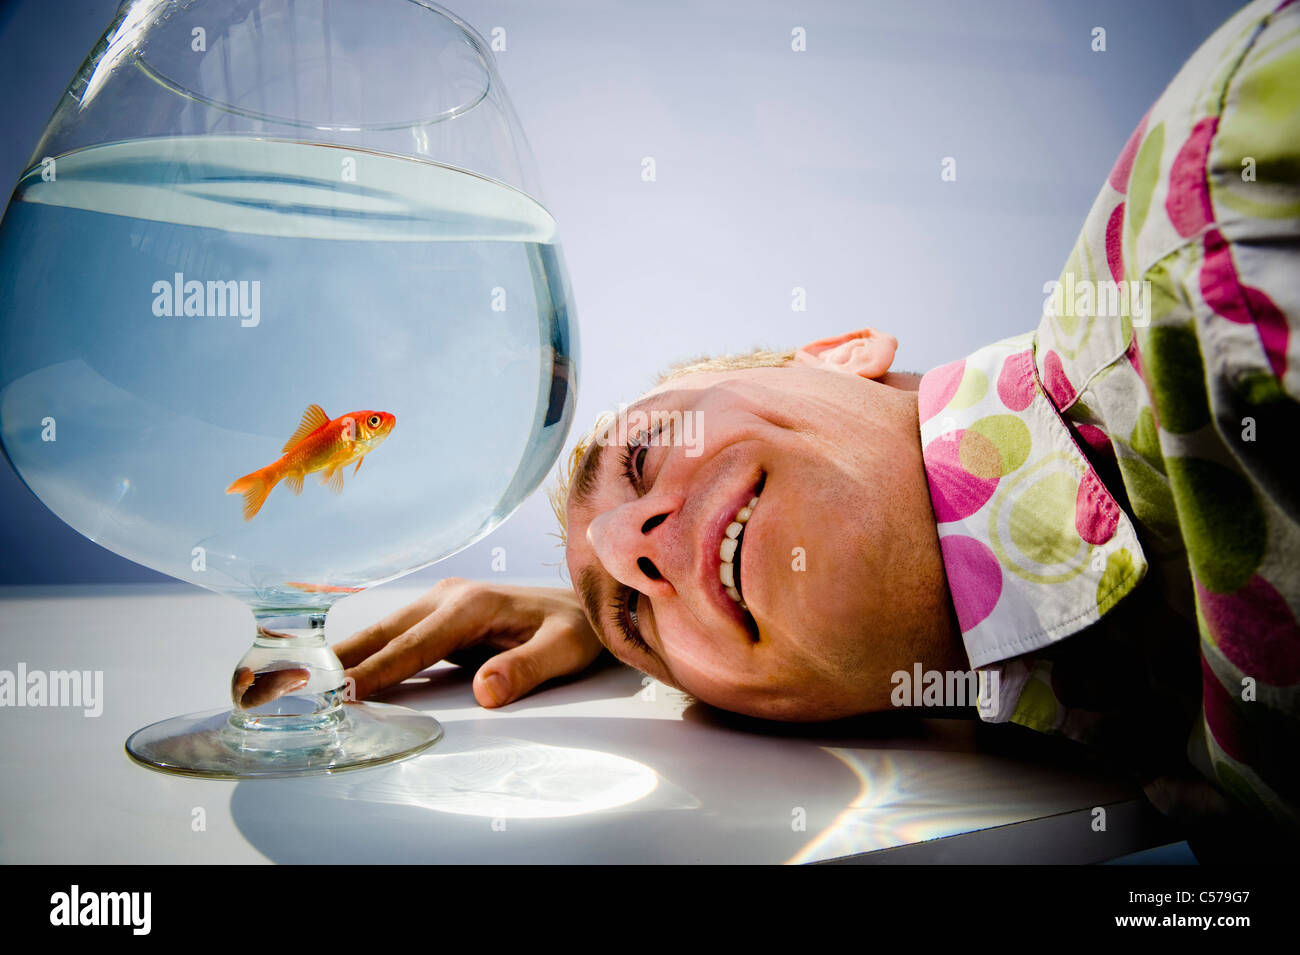 Man admiring goldfish in bowl Banque D'Images